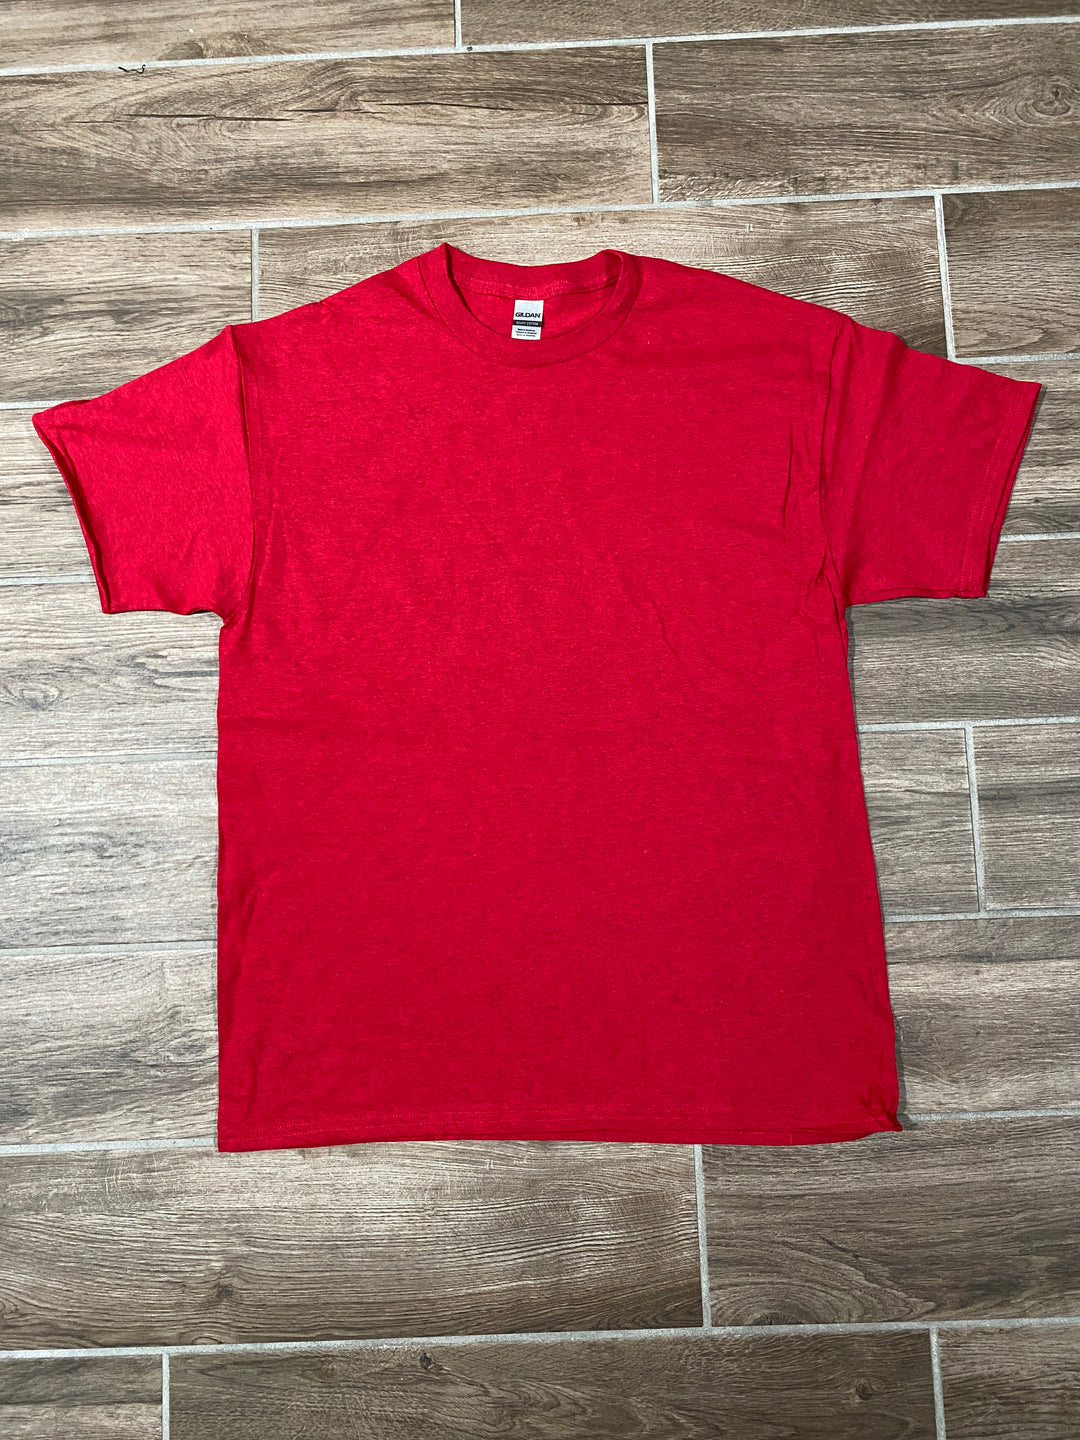 Antique Cherry Red Gildan Shirt - DTG Sample